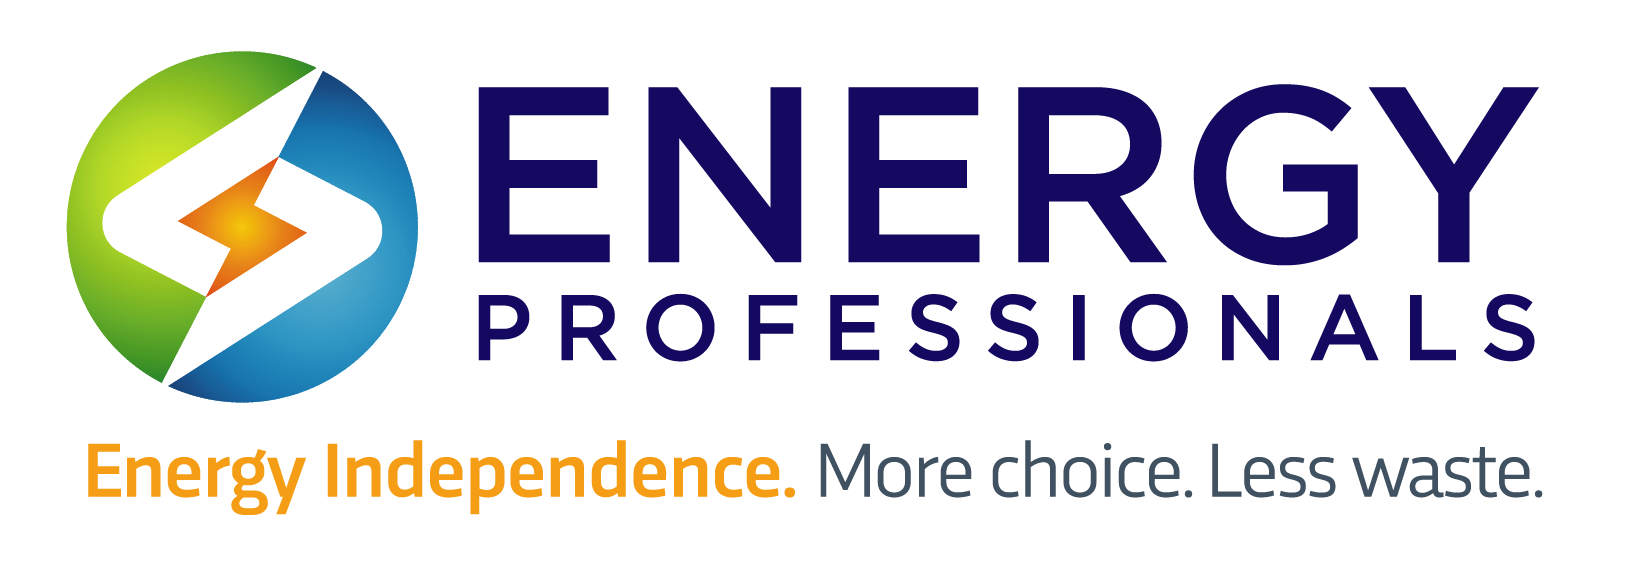 Energy Professionals, LLC Company Logo